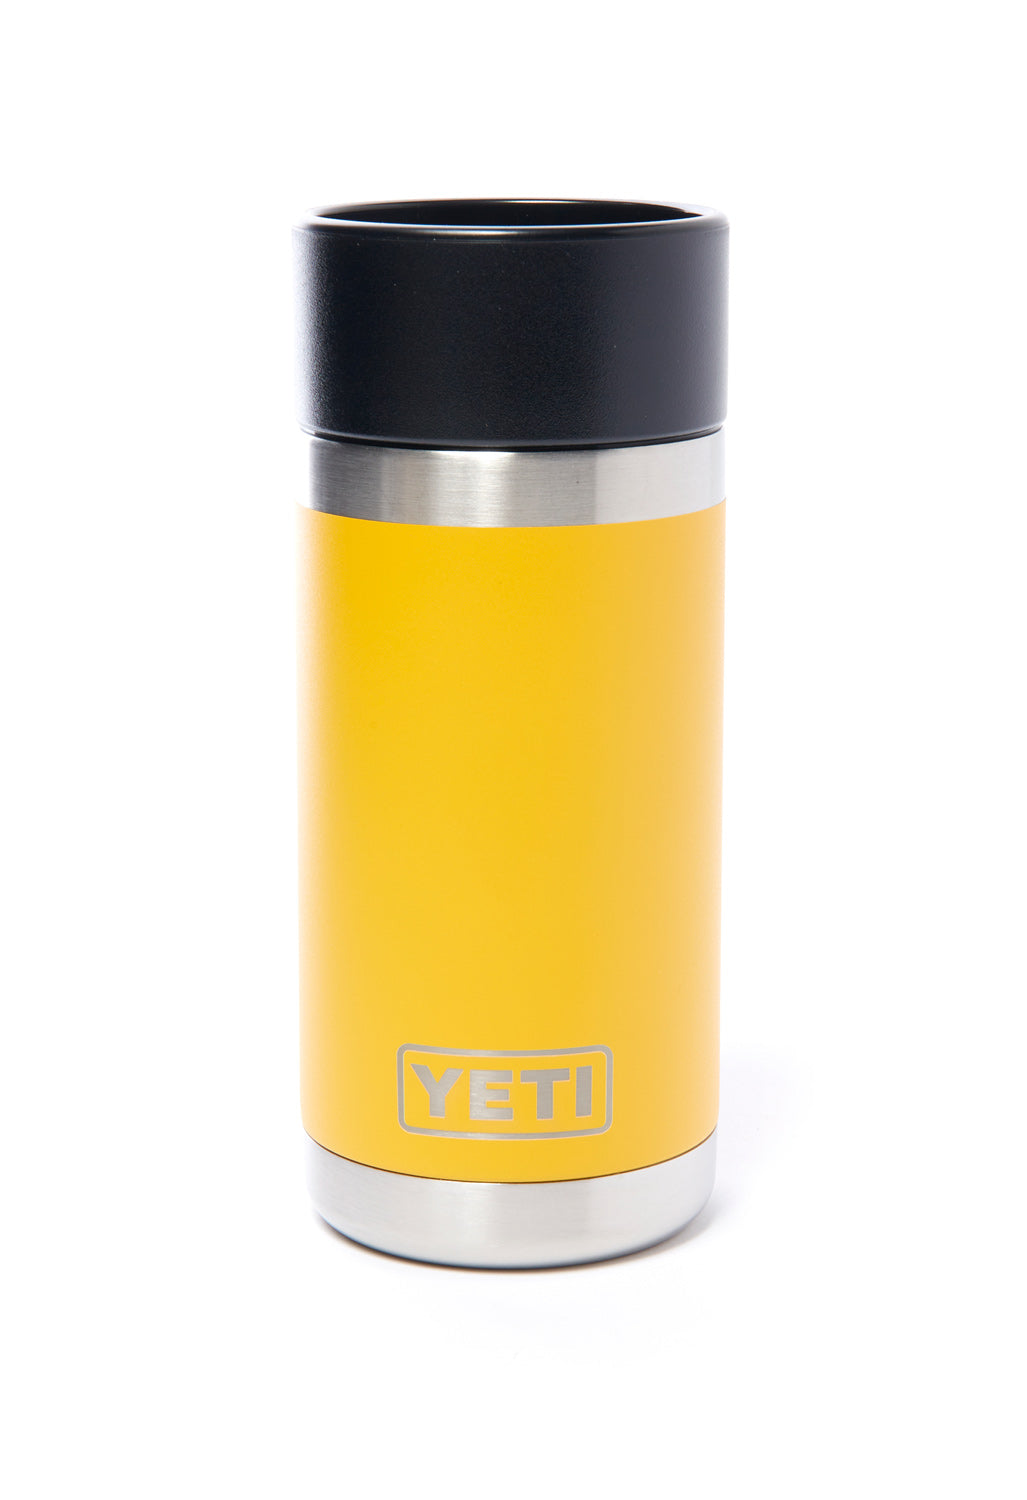 Yeti - Rambler 12 oz Bottle with Hotshot Cap Alpine Yellow